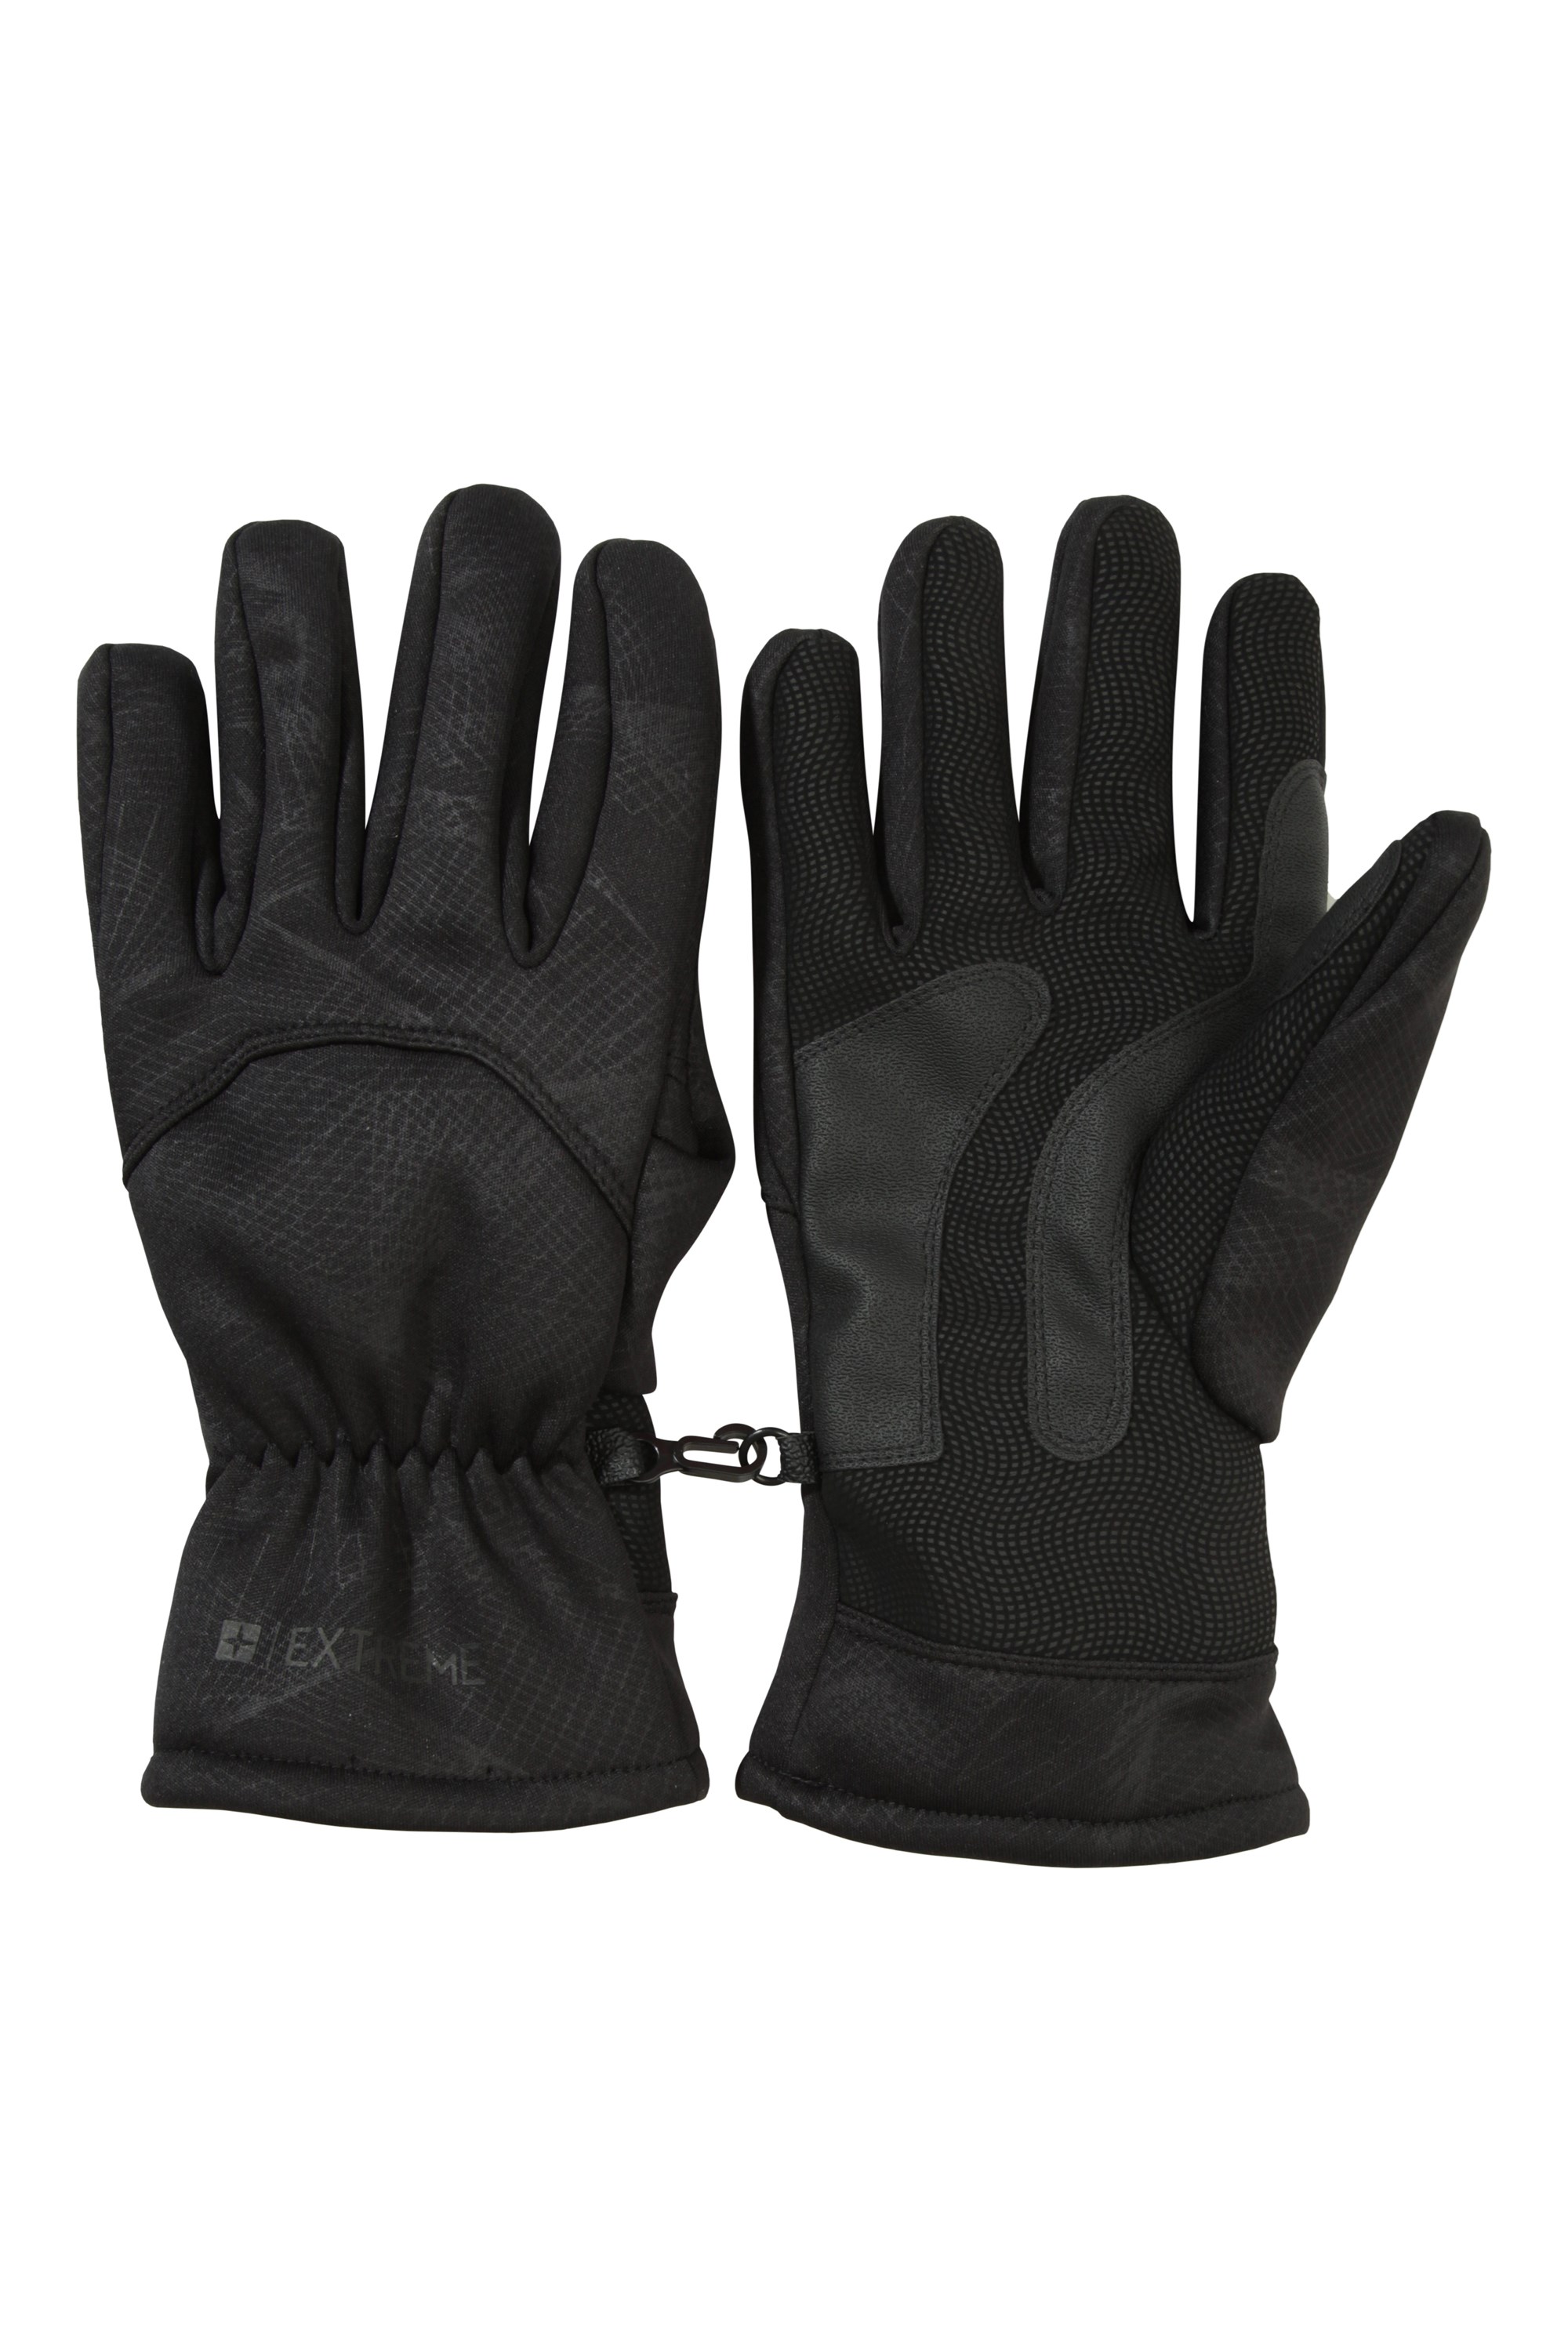 Mountain Warehouse Mens Ski Glove Male Merino Liner Winter Warm Soft Gloves 